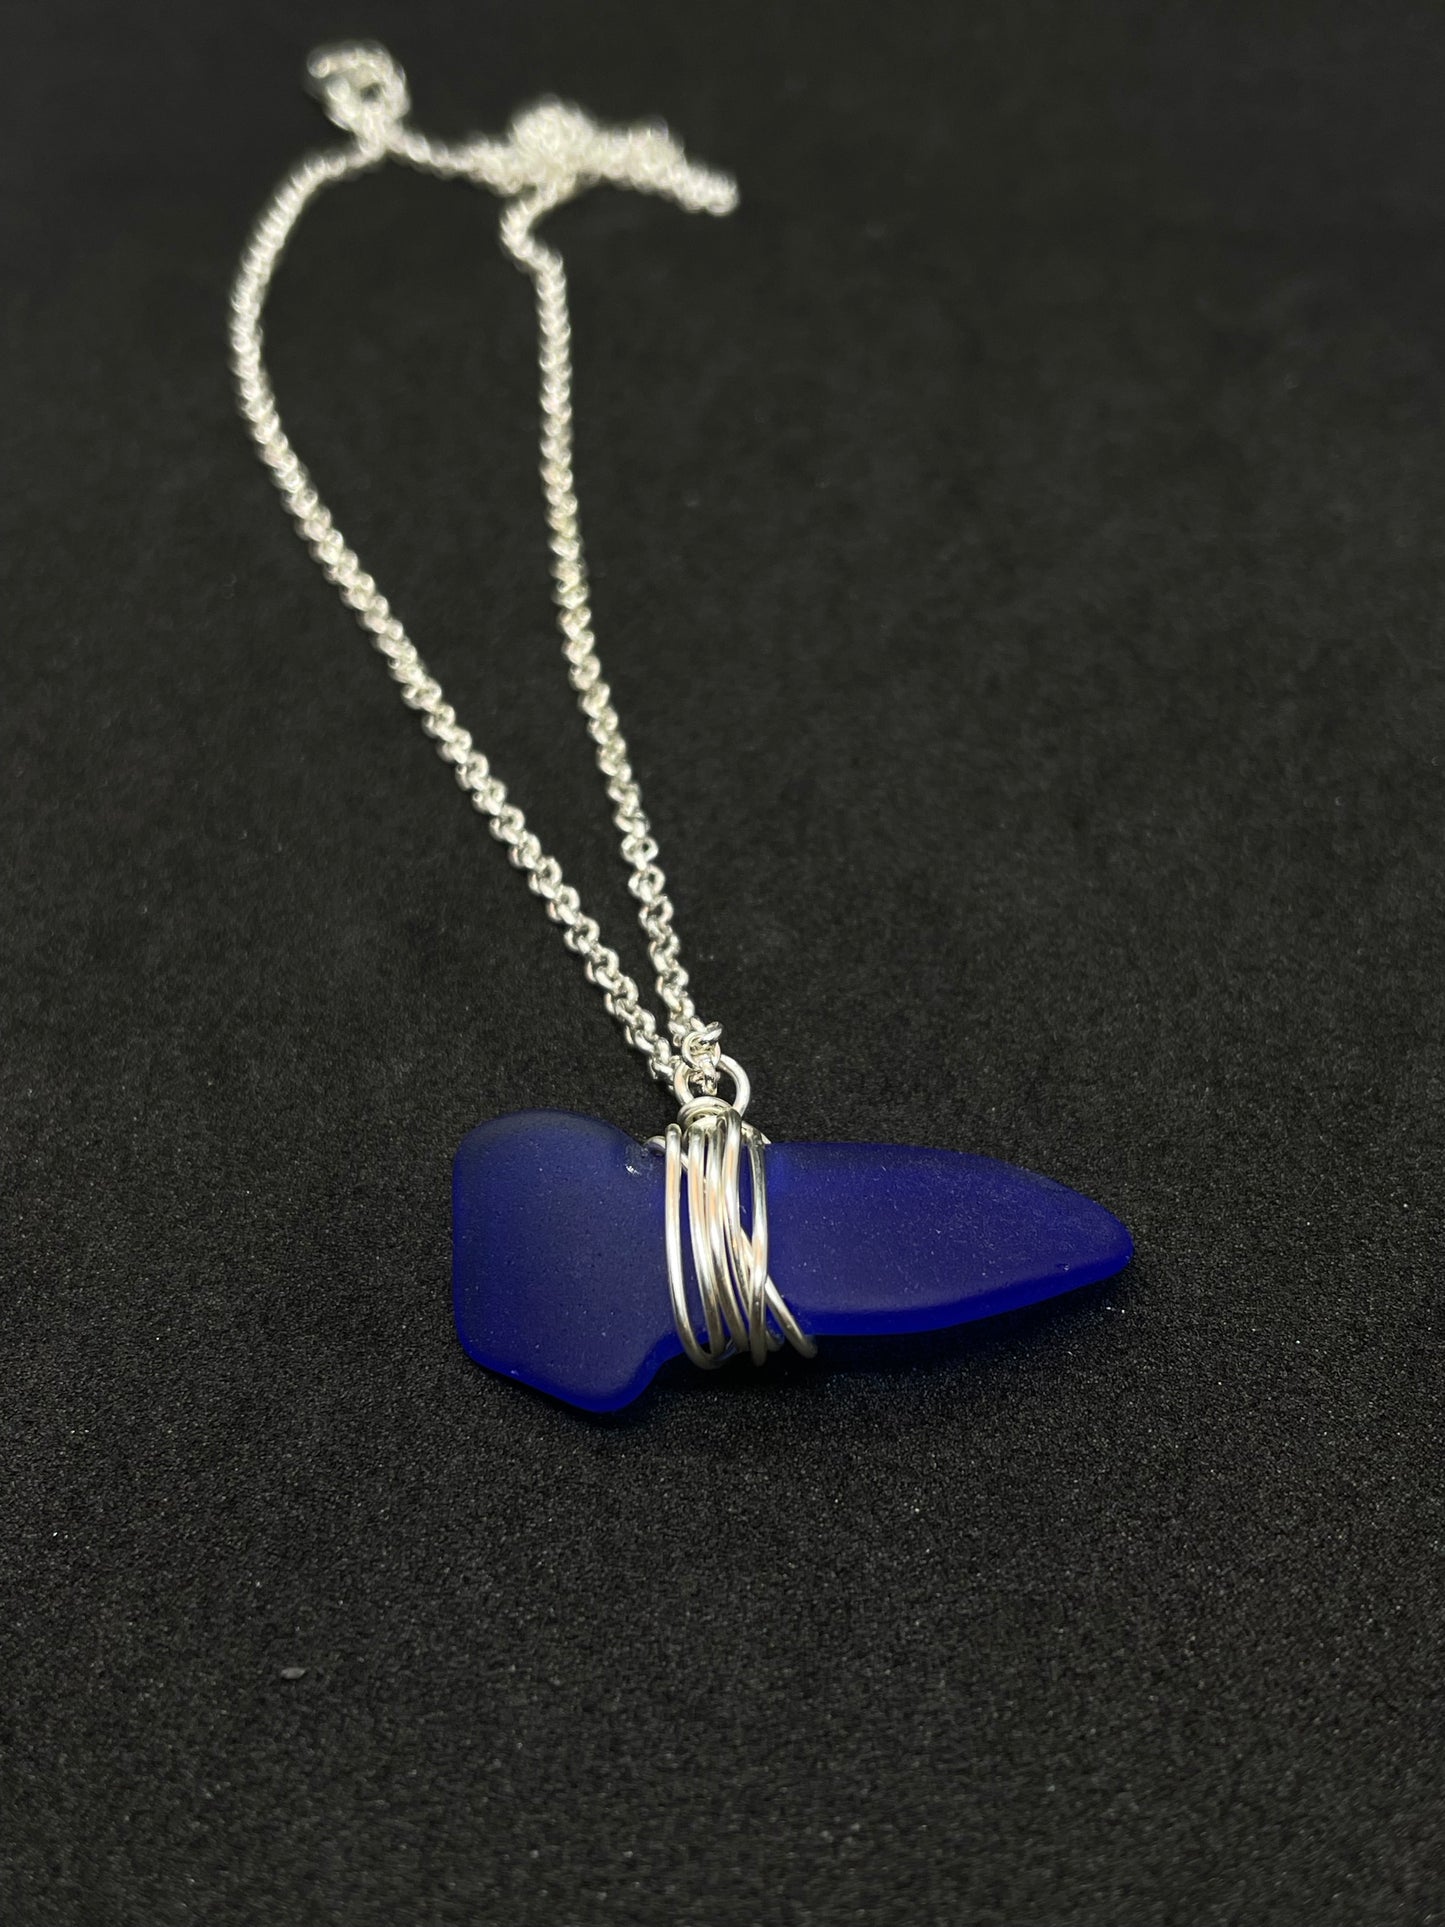 Blue seaglass necklace